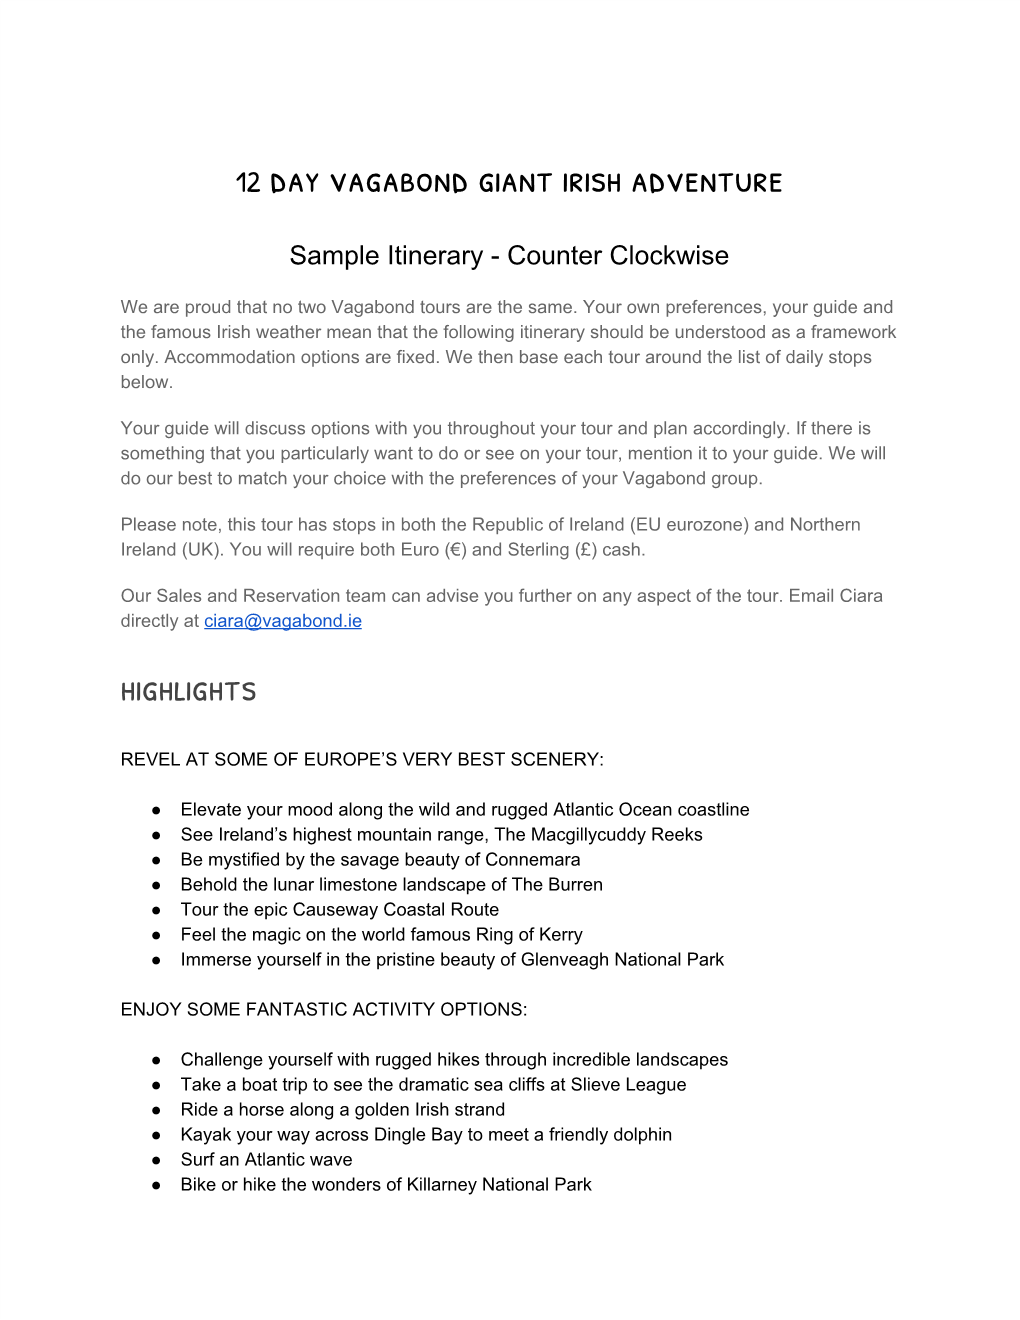 12​ Day Vagabond Giant Irish Adventure Highlights